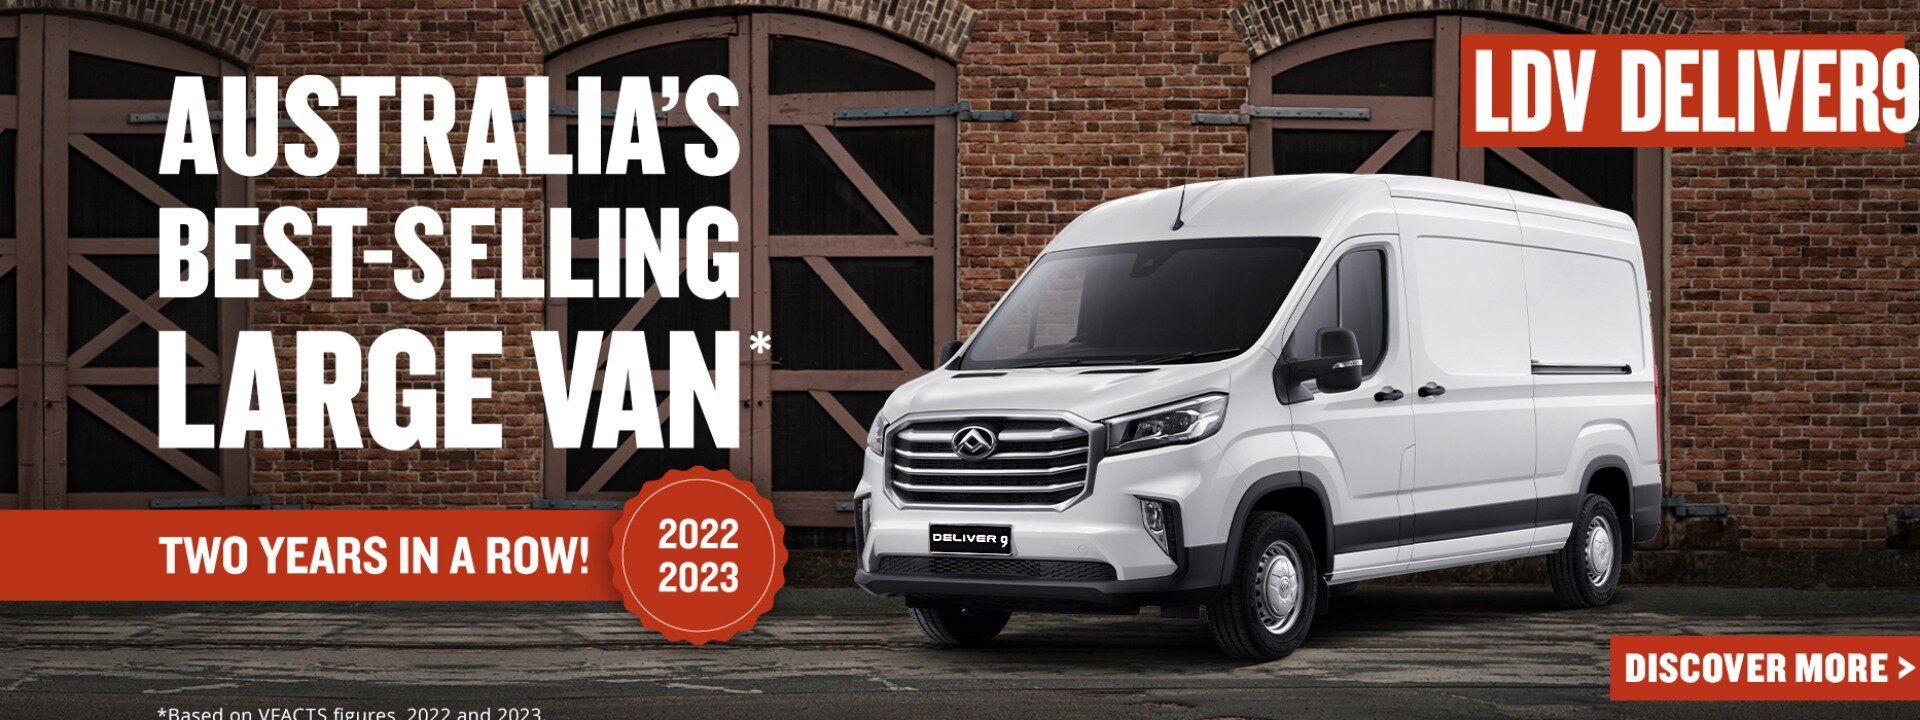 Delivery 9 Van. Australia's Best Selling Large Van. Discover More. 